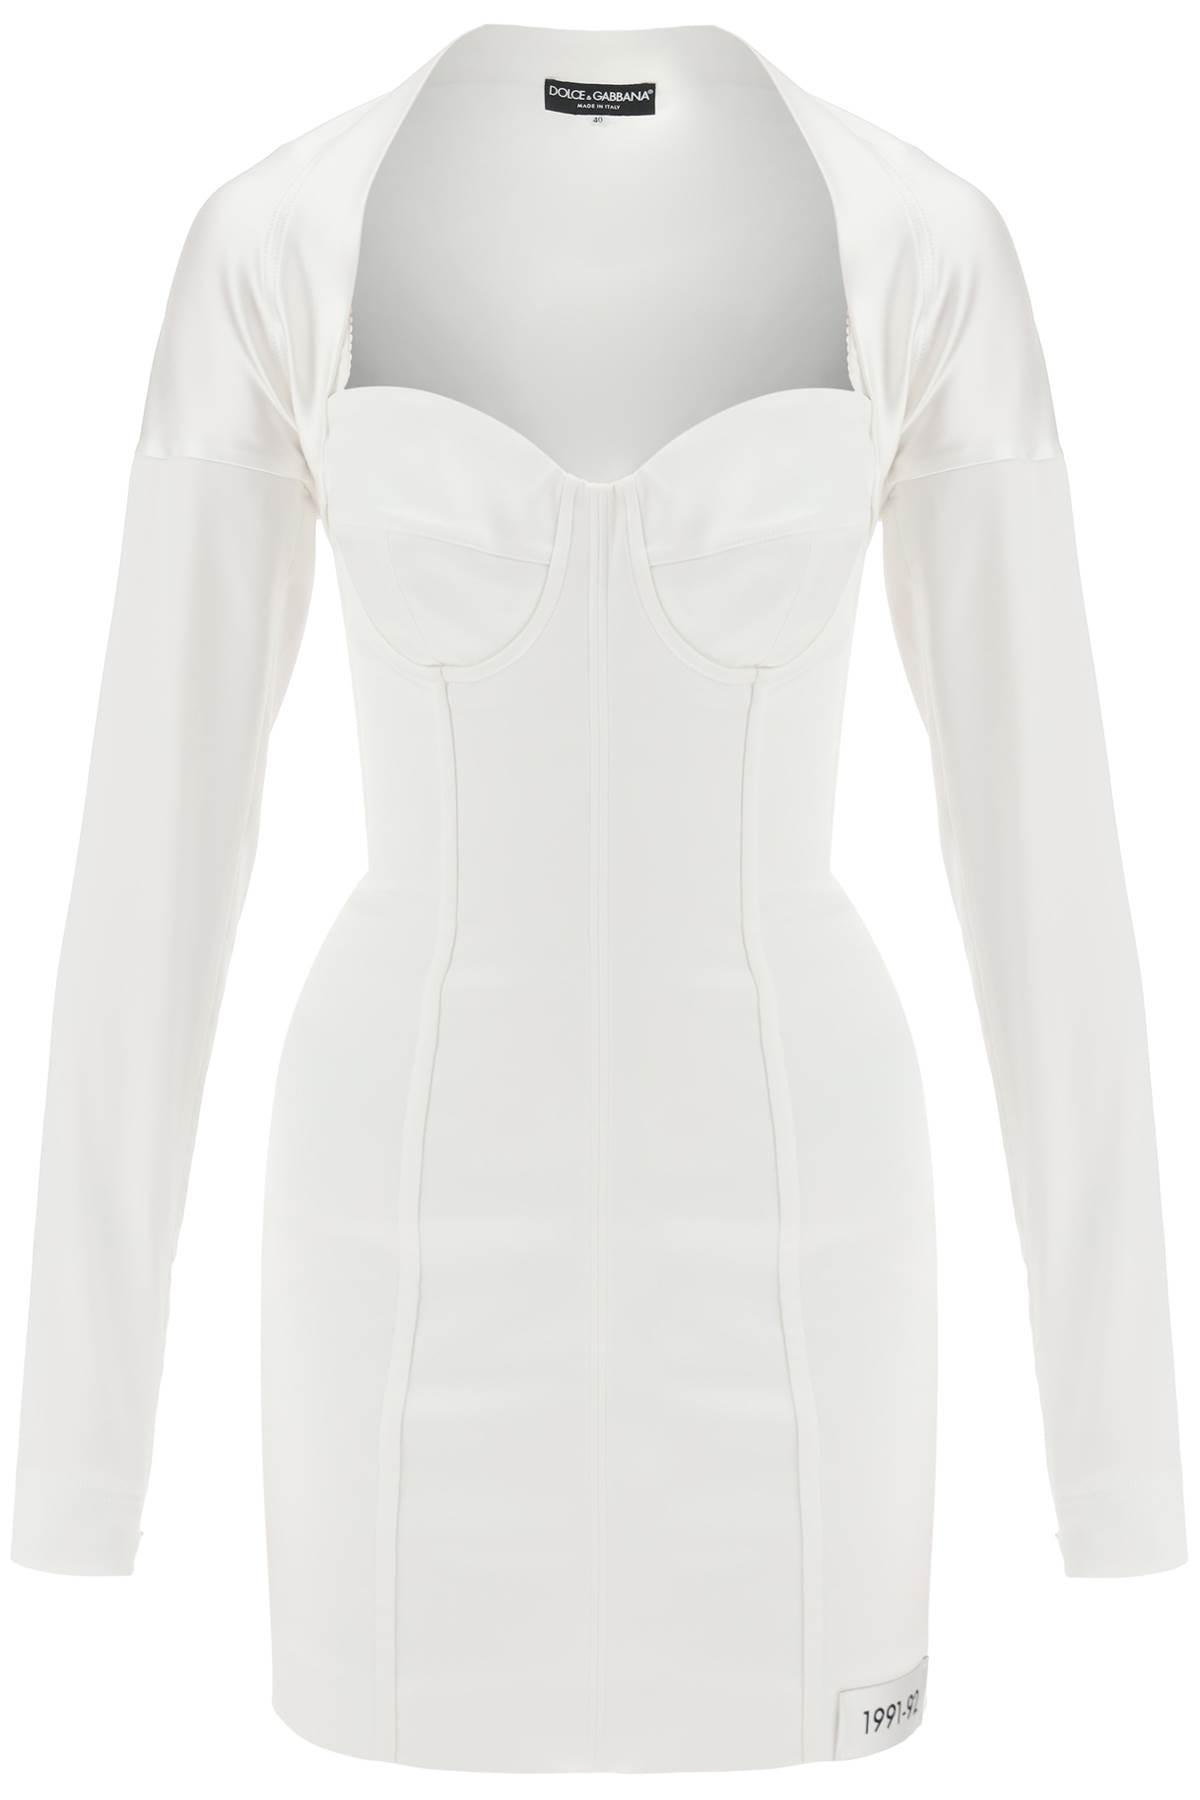 Dolce & Gabbana Satin Shrug in White | Lyst